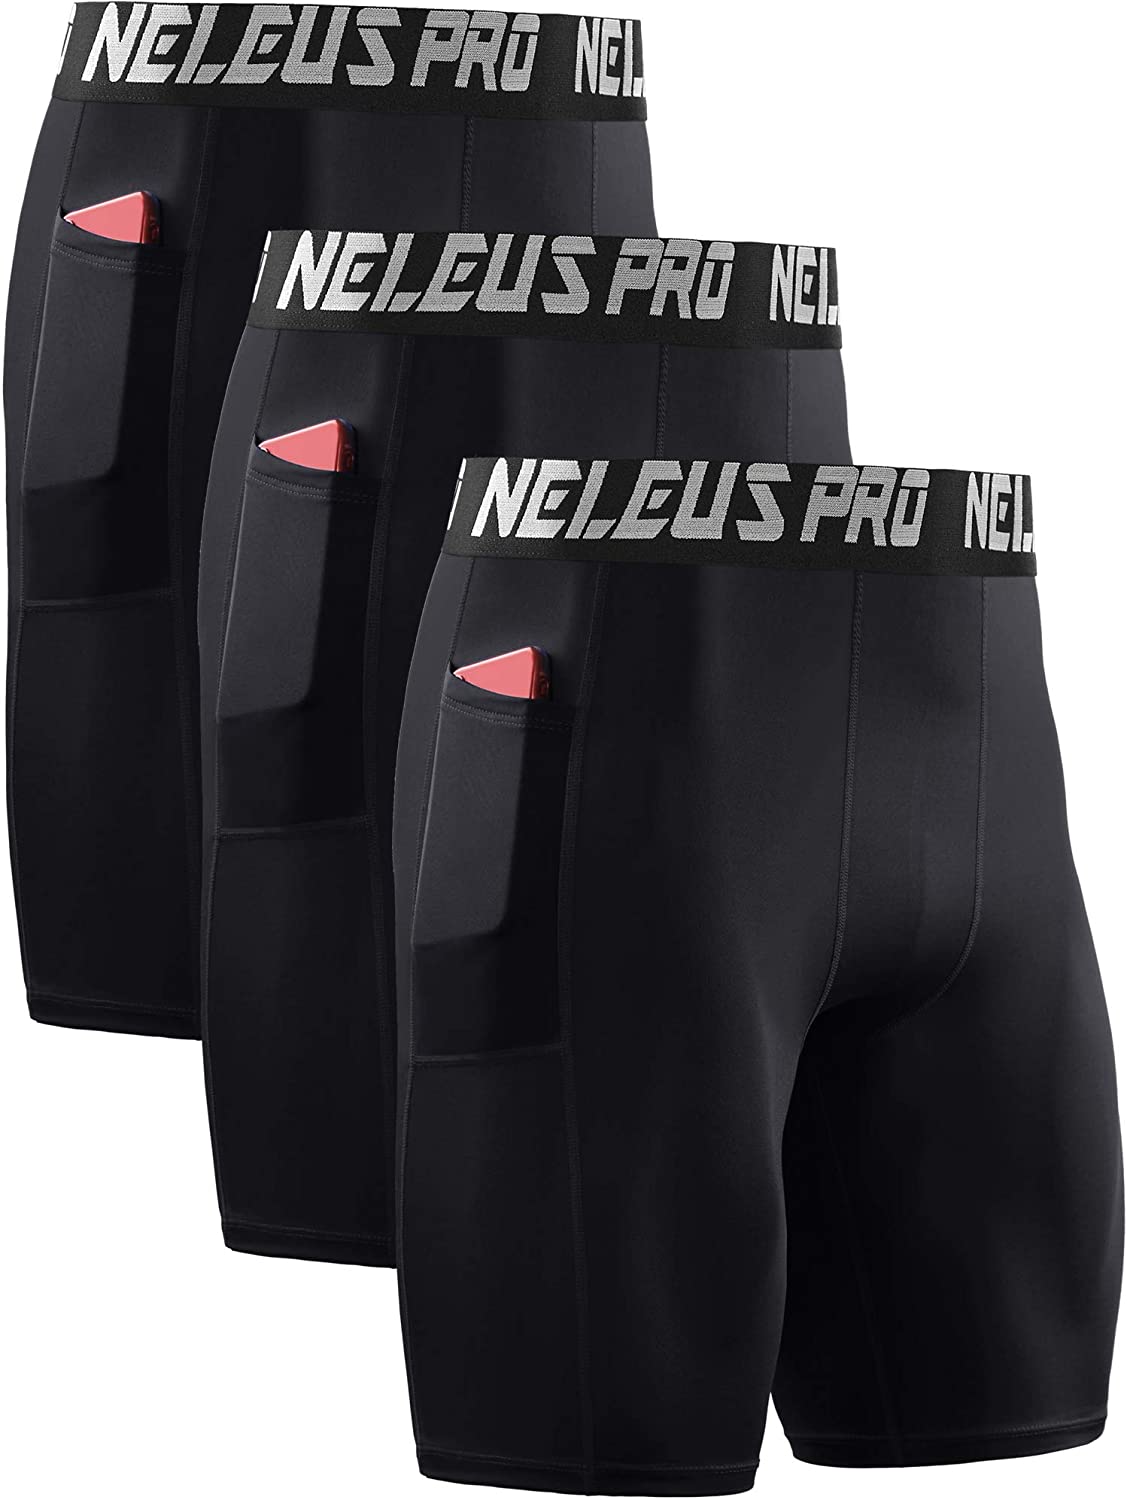 Neleus Men's 3 Pack Compression Short - red - Small 